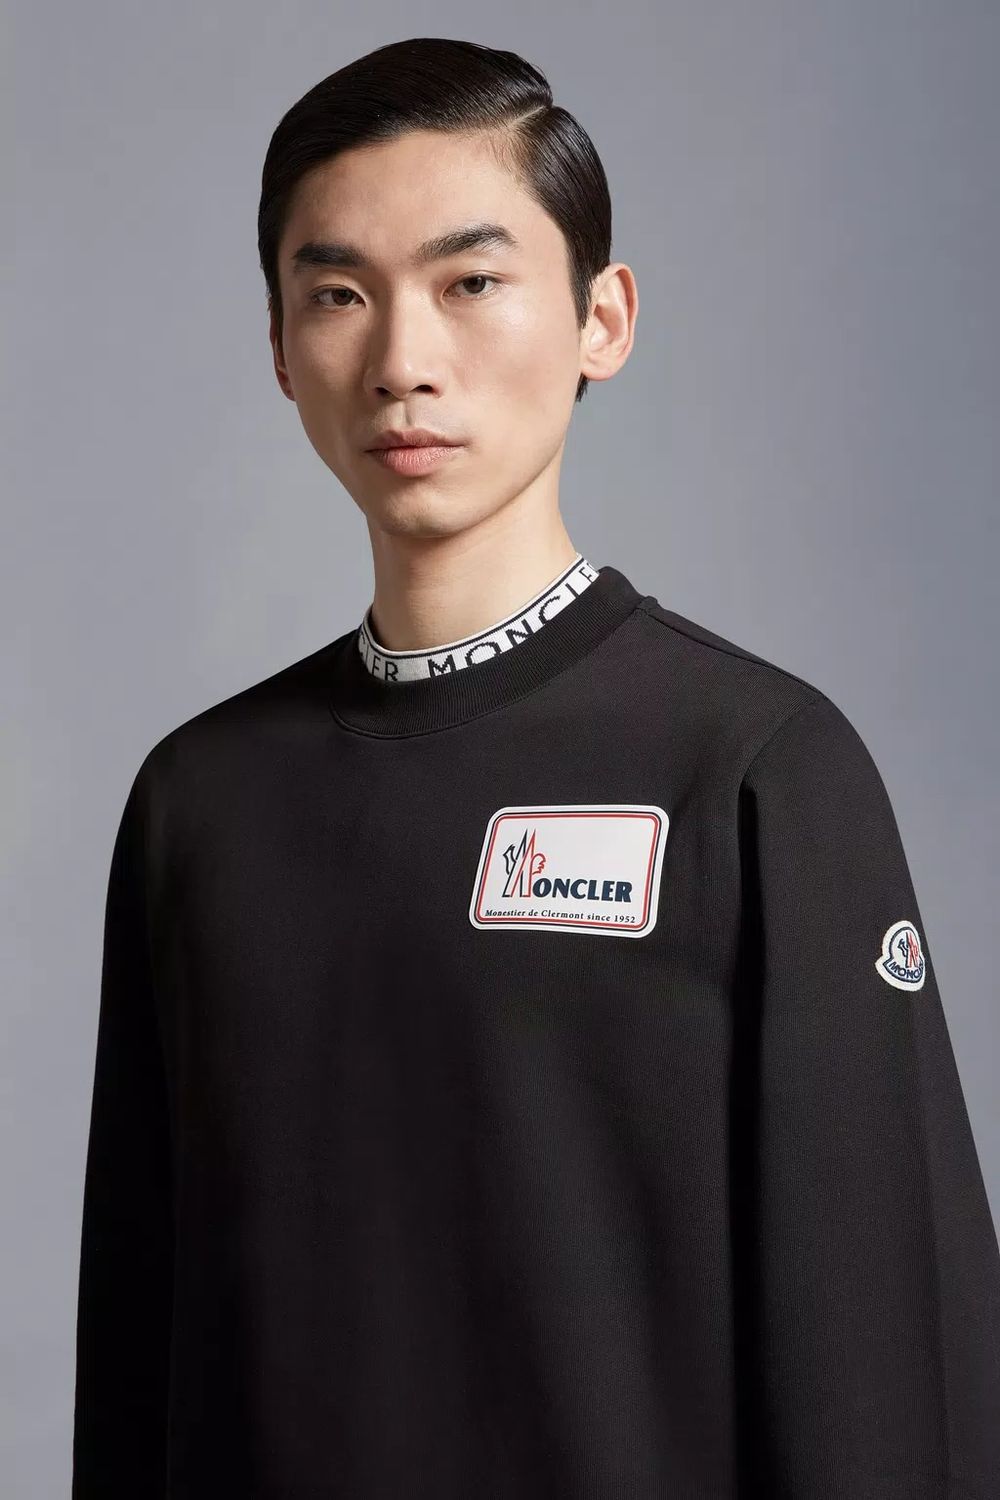 MONCLER Classic Crewneck Sweatshirt with Logoed Design - Black